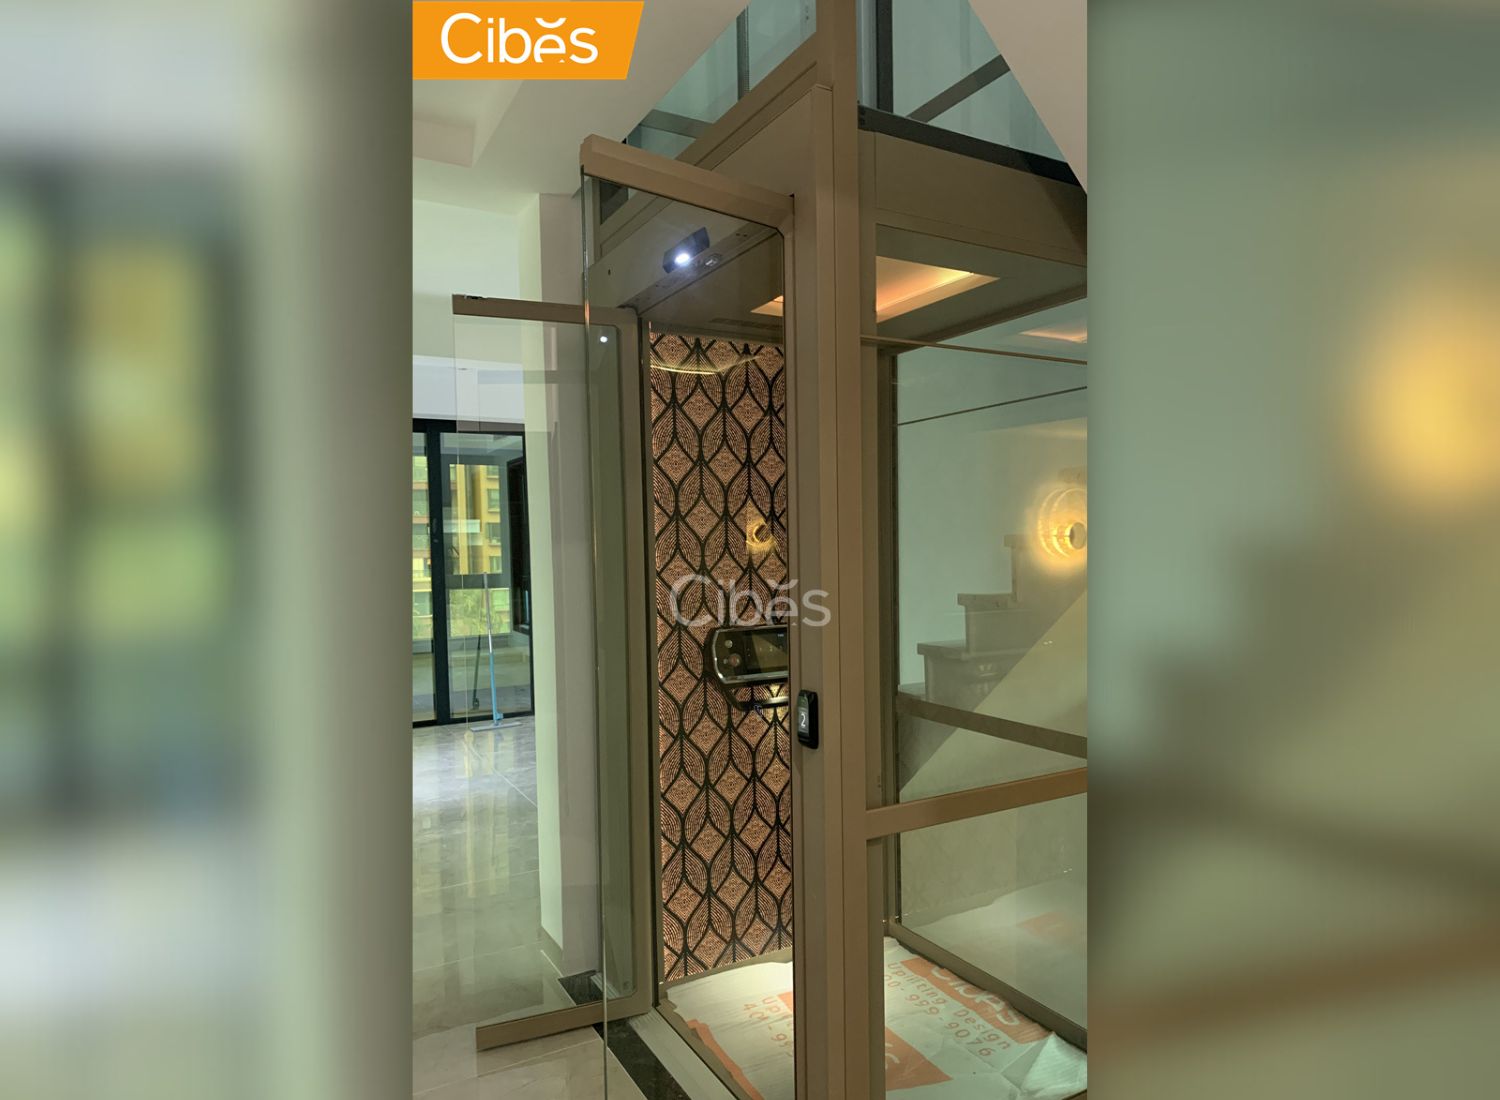 GLOBAL PROJECTS Cibes lift home elevater ซีเบส ลิฟท์ ลิฟต์บ้าน (22)